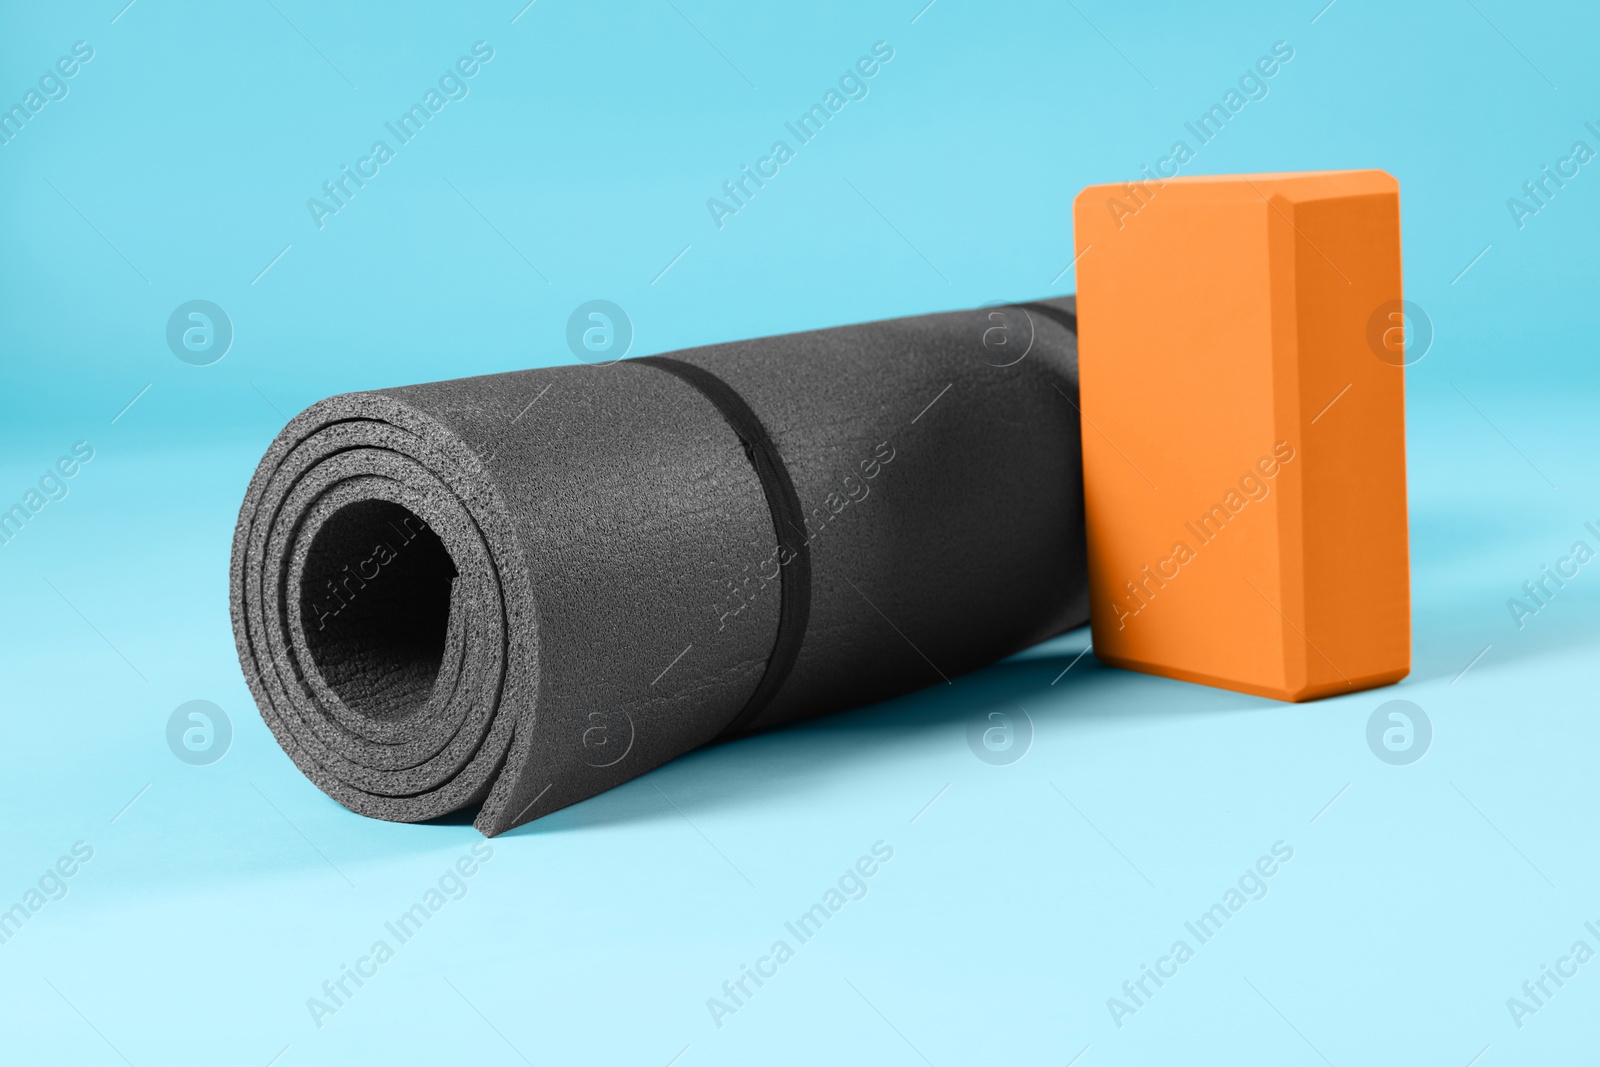 Photo of Exercise mat and yoga block on light blue background